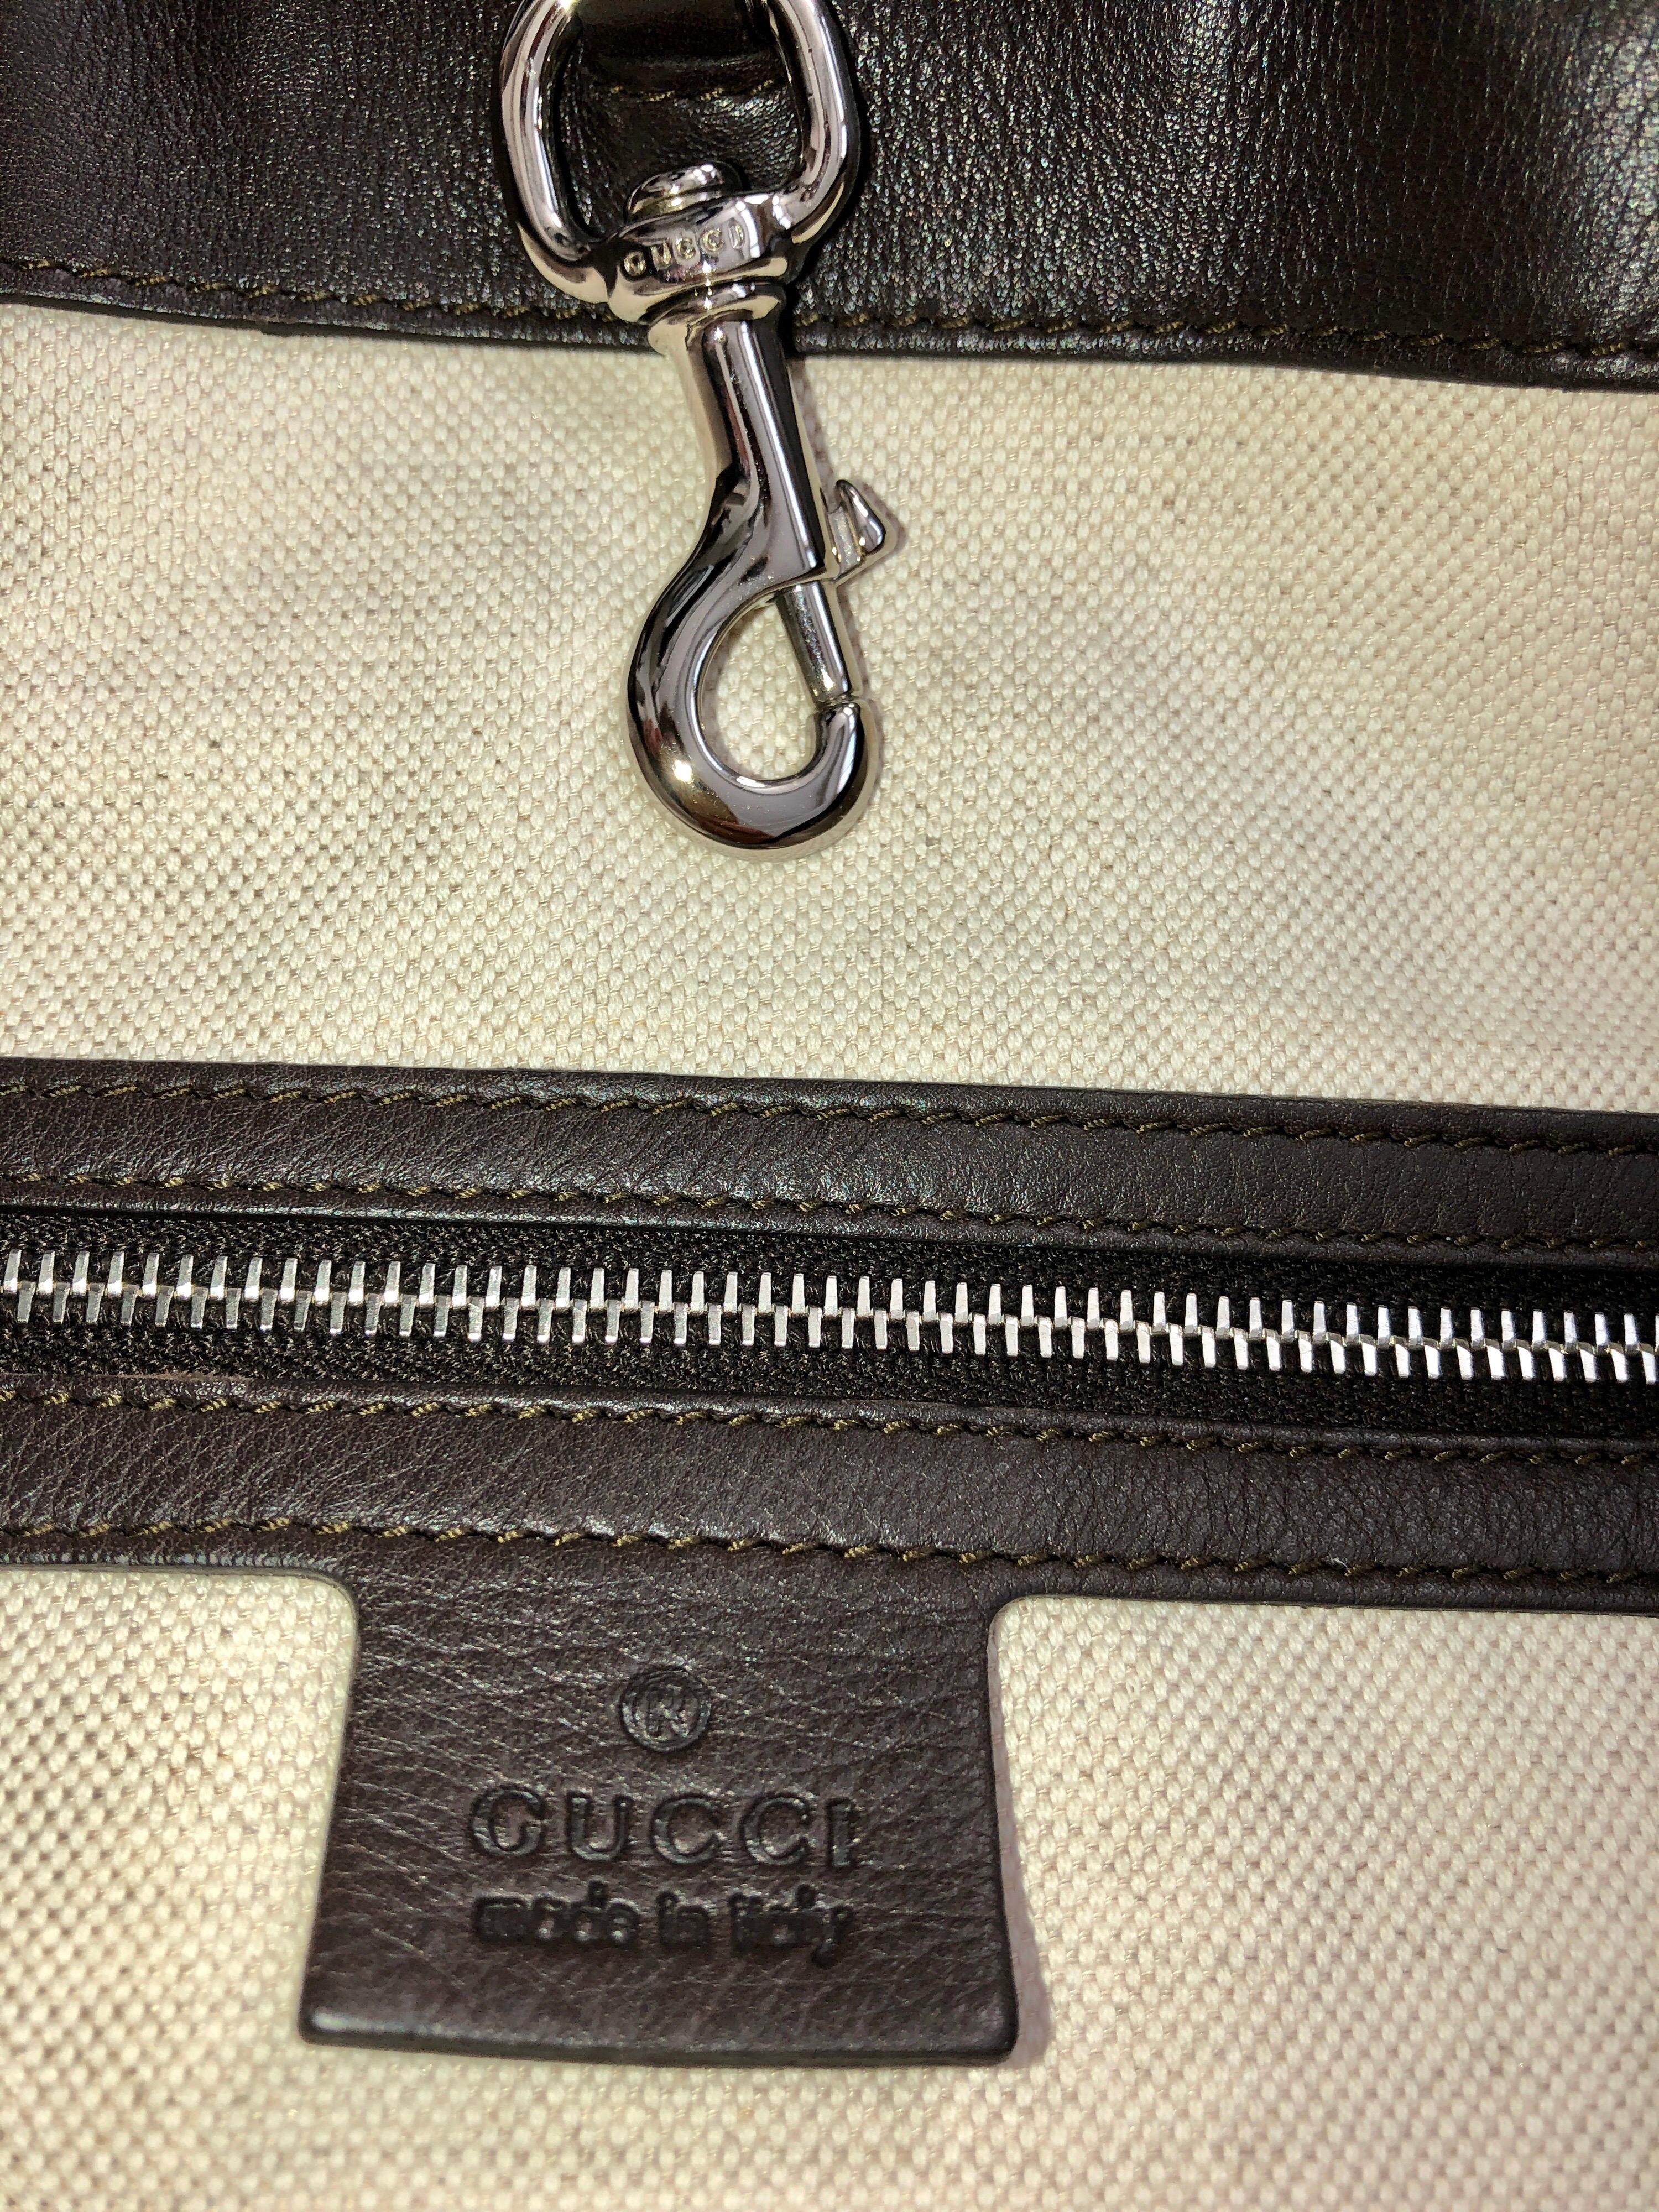 UNWORN Gucci Woven Raffia Metallic Crocodile Trimming Shopper Shoulder Bag Tote 1